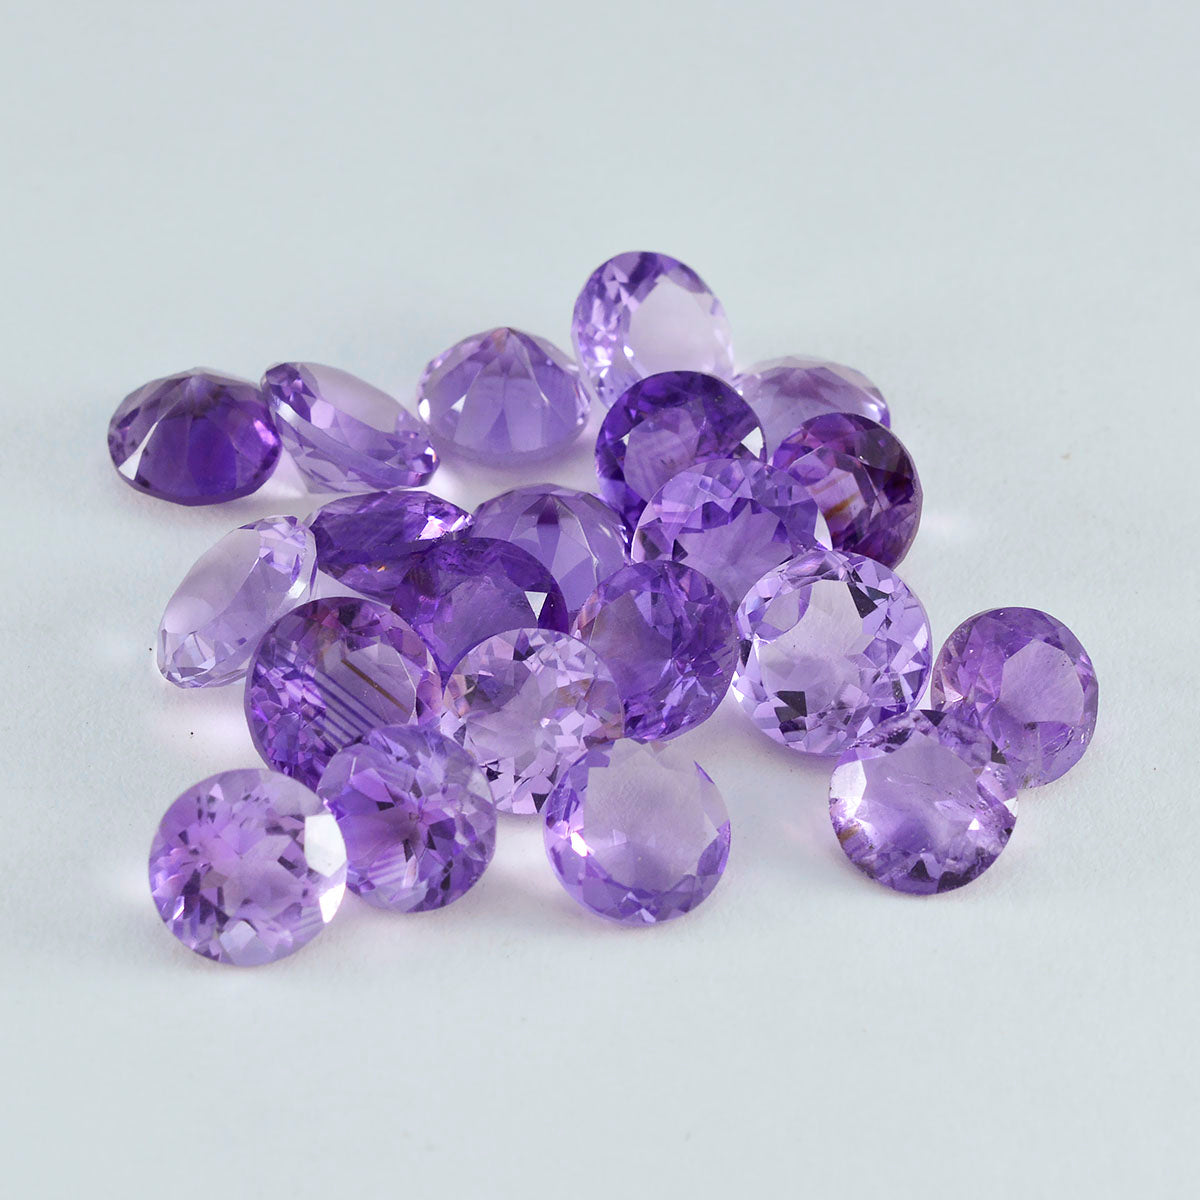 Riyogems 1PC Genuine Purple Amethyst Faceted 6x6 mm Round Shape superb Quality Loose Gem